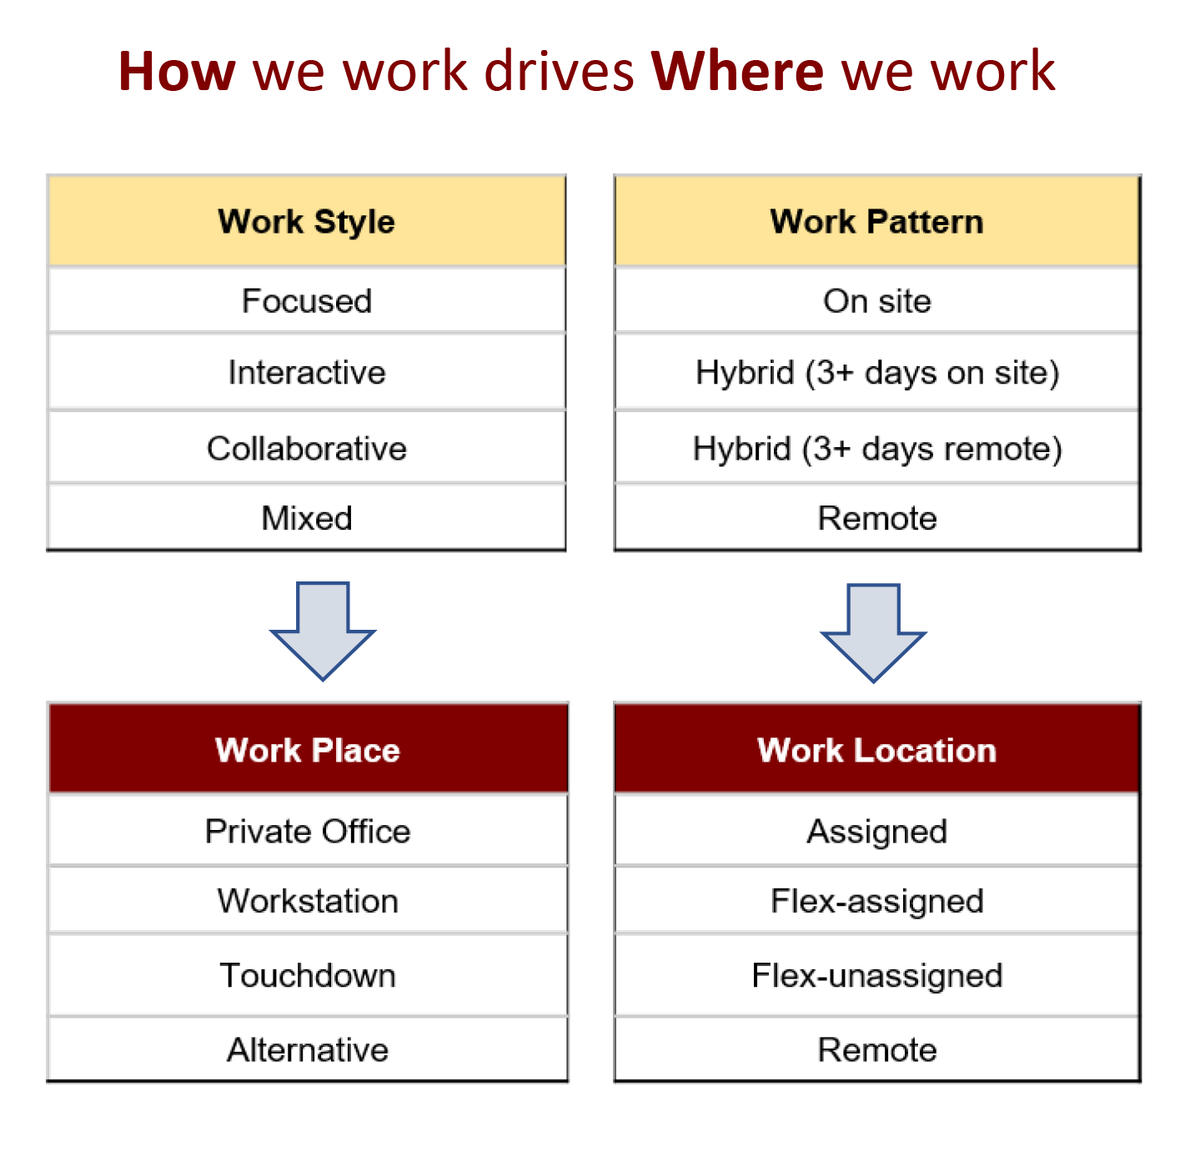 How we work drives where we work